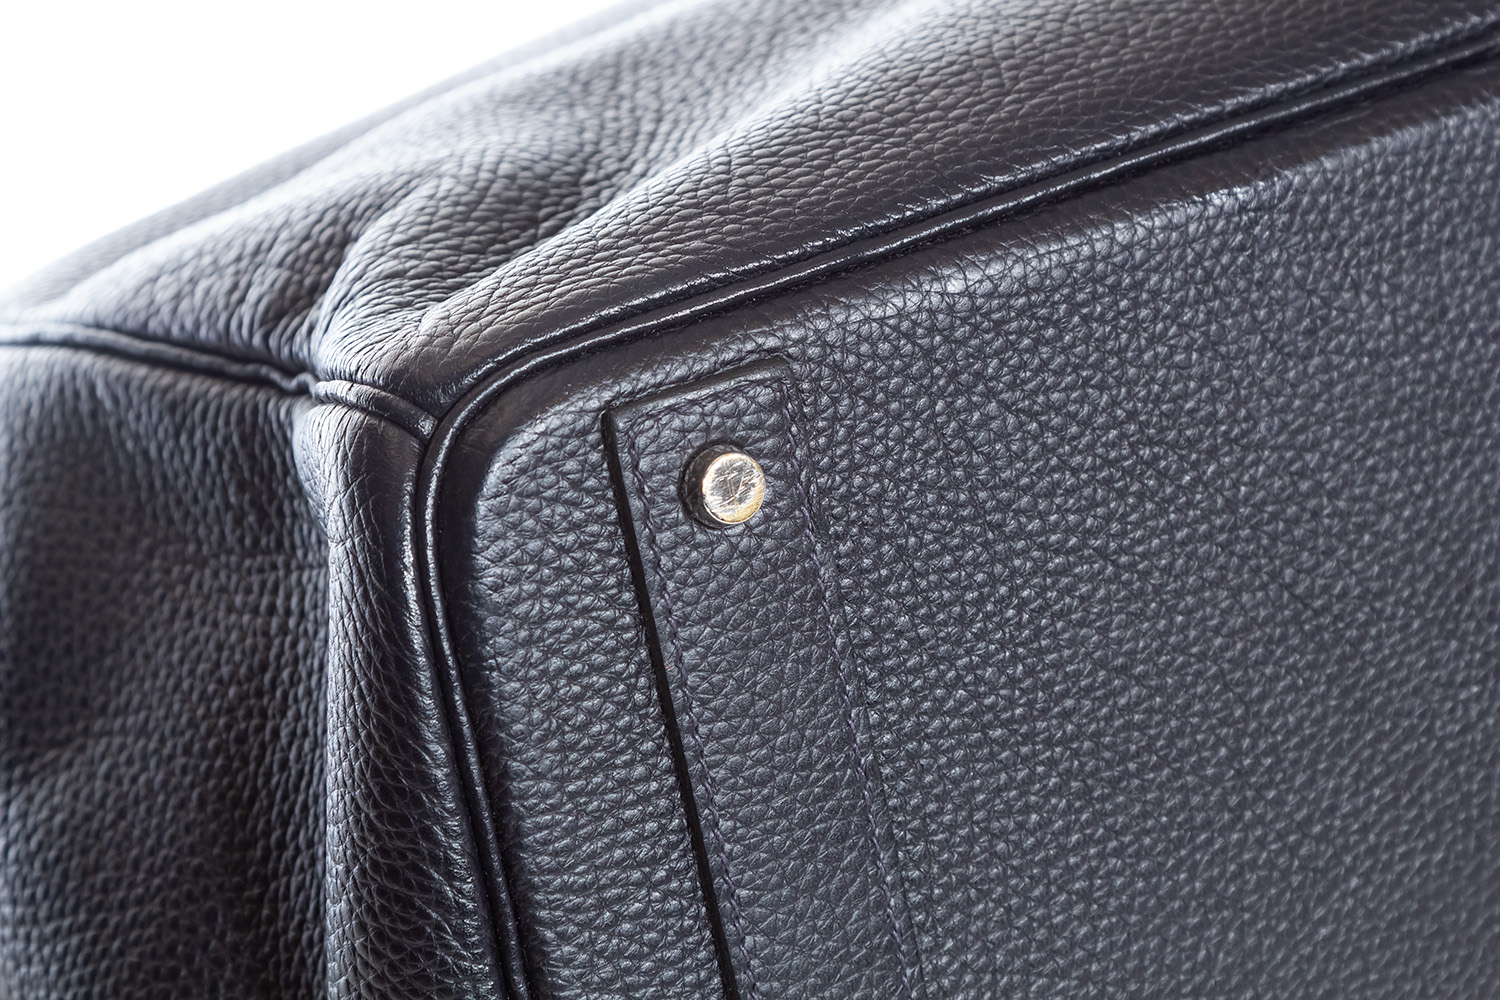 HERMES Birkin 30cm Smooth Calf Leather Silver Hardware Bag Navy Blue-US